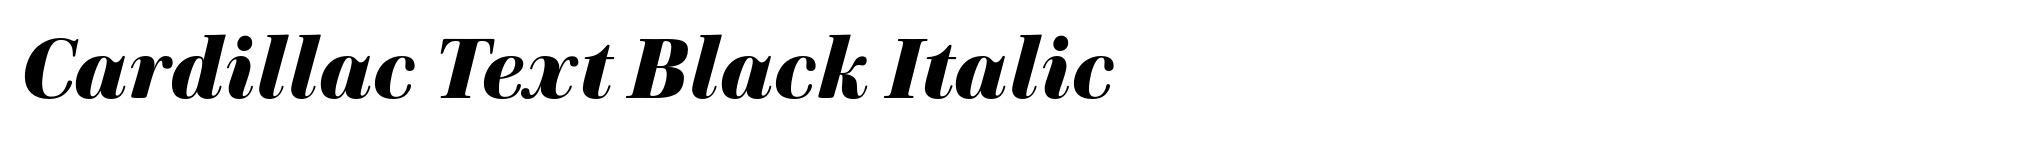 Cardillac Text Black Italic image